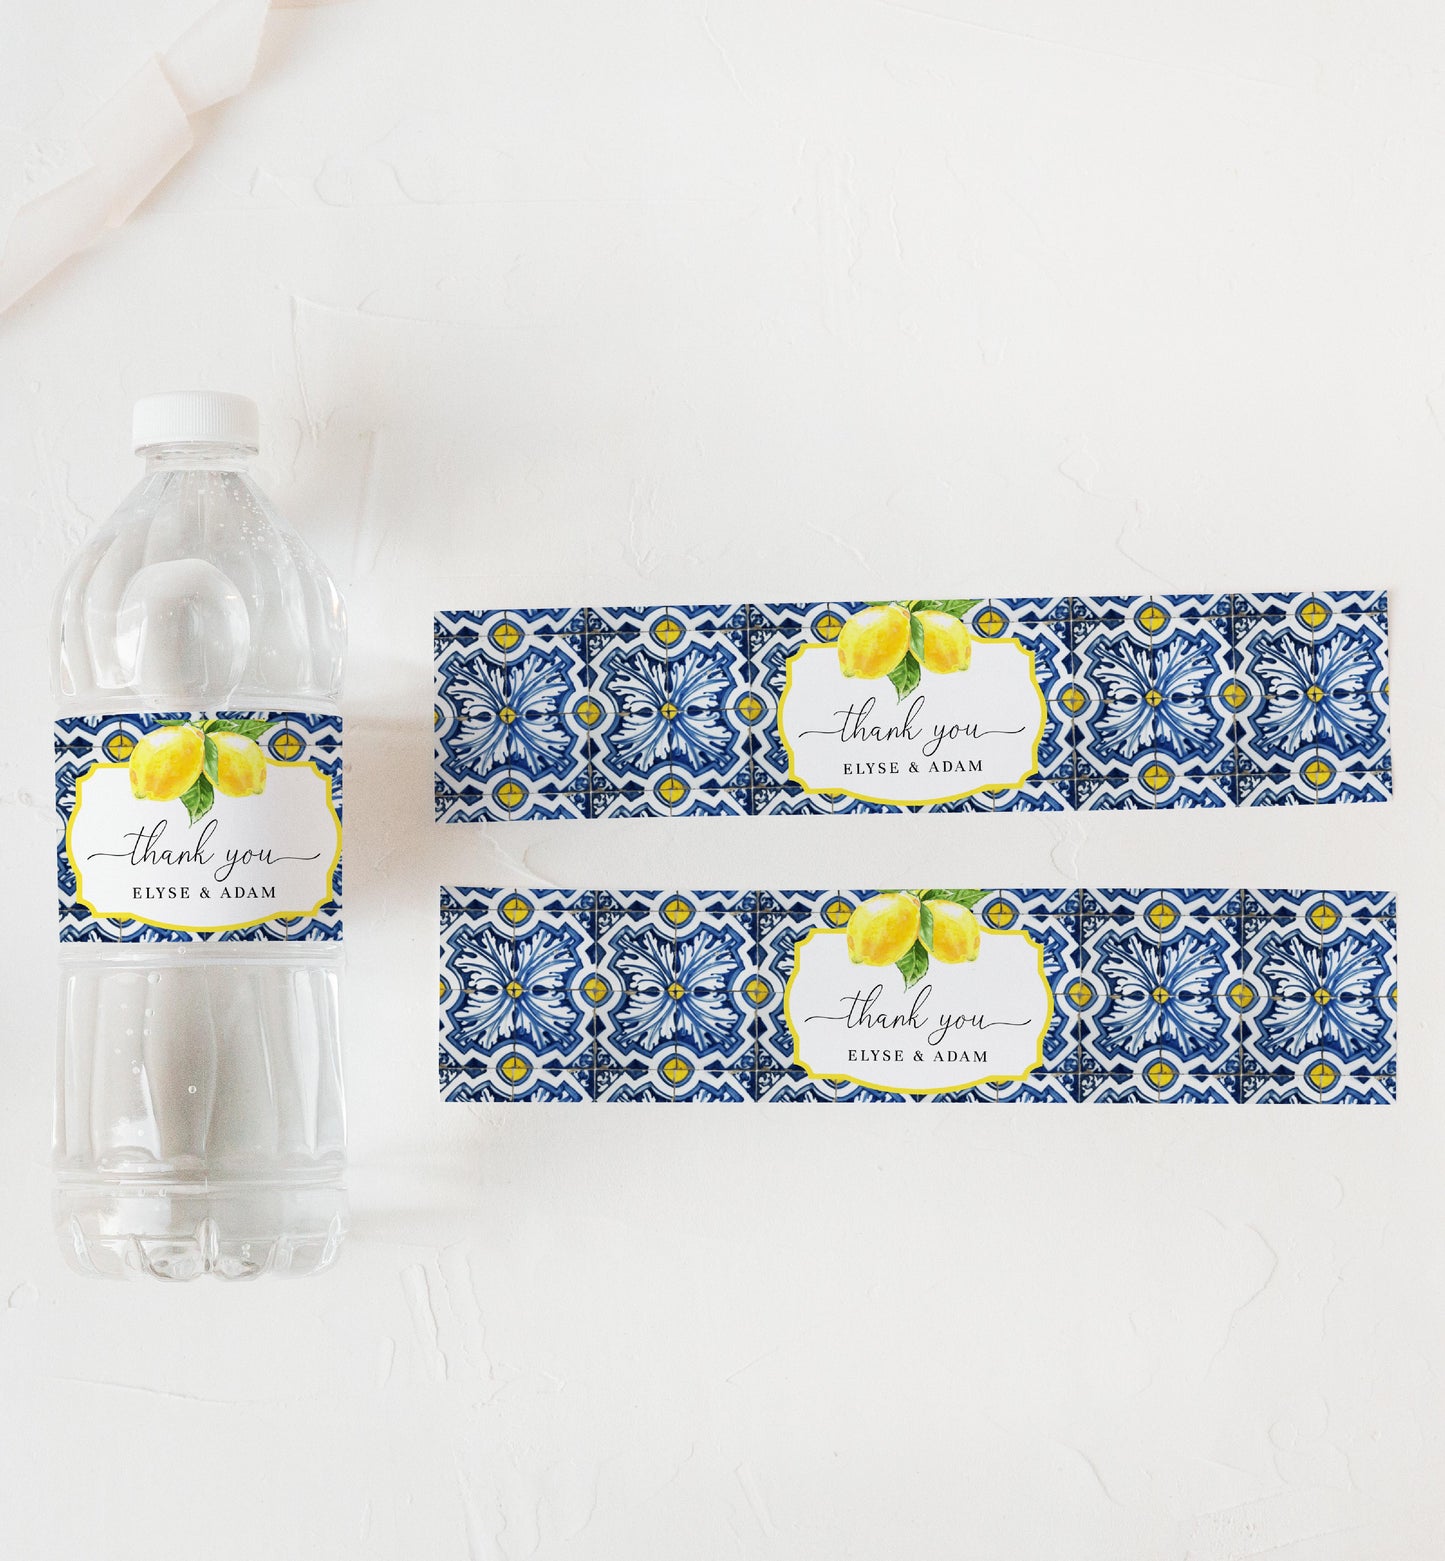 Positano Lemons | Printable Water Bottle Thank You Label Template